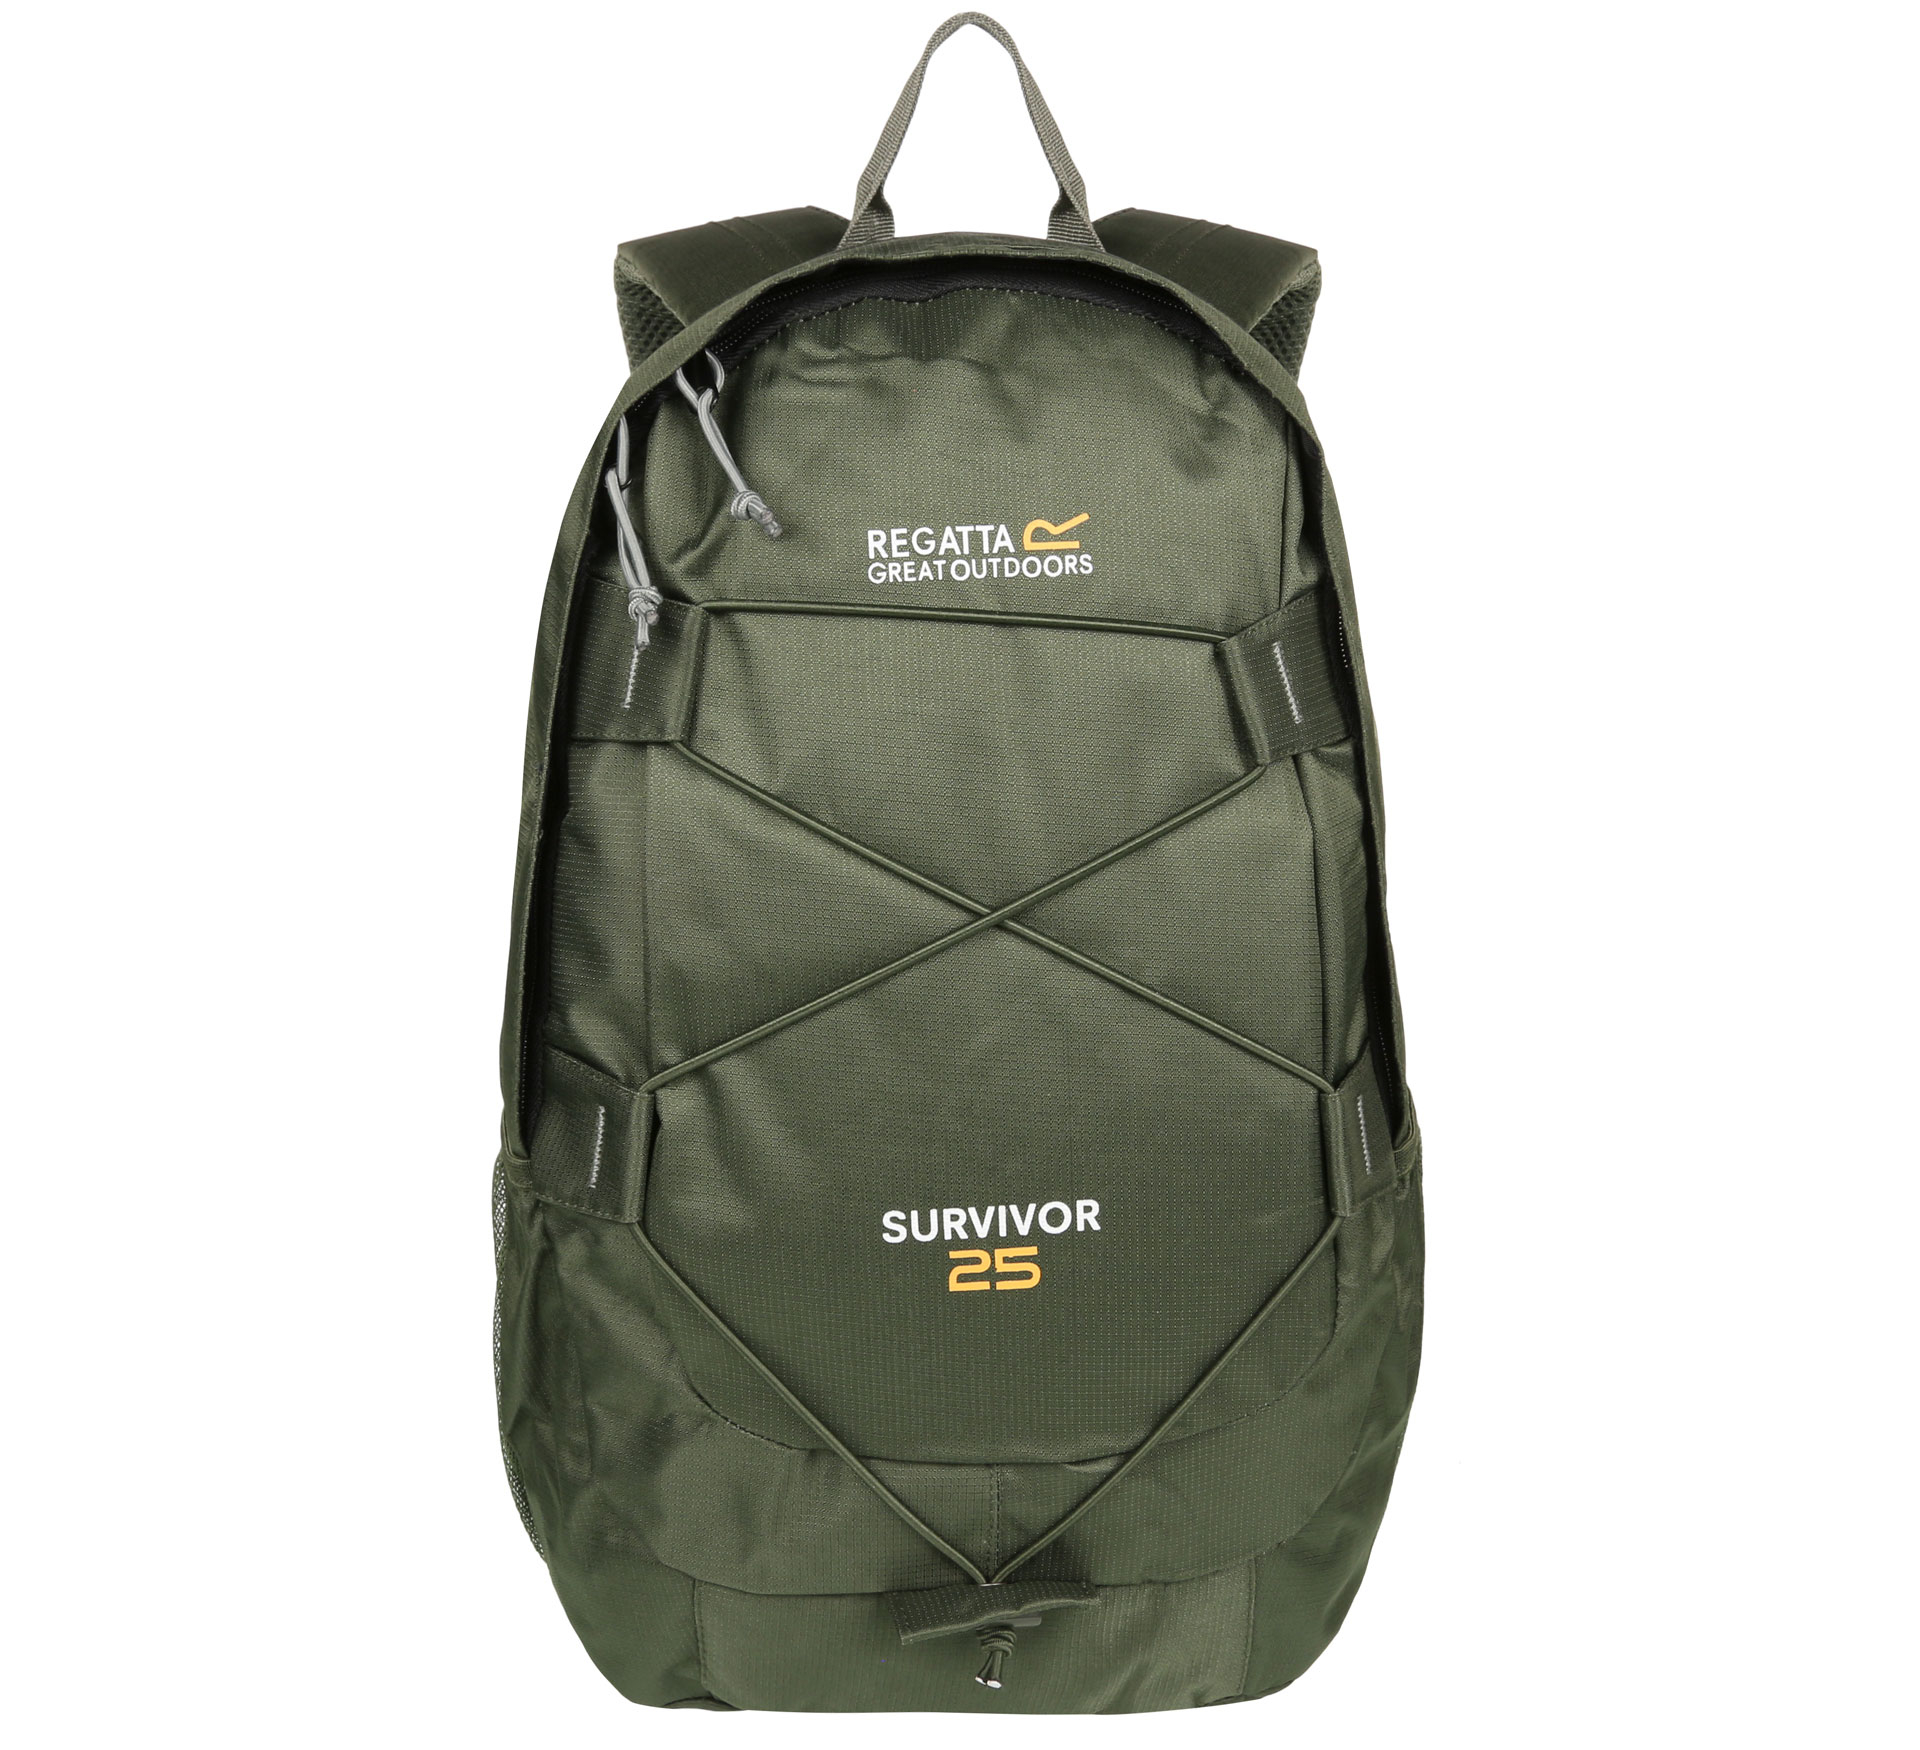 Le sac à dos Regatta Backpack Survivor III (25L)